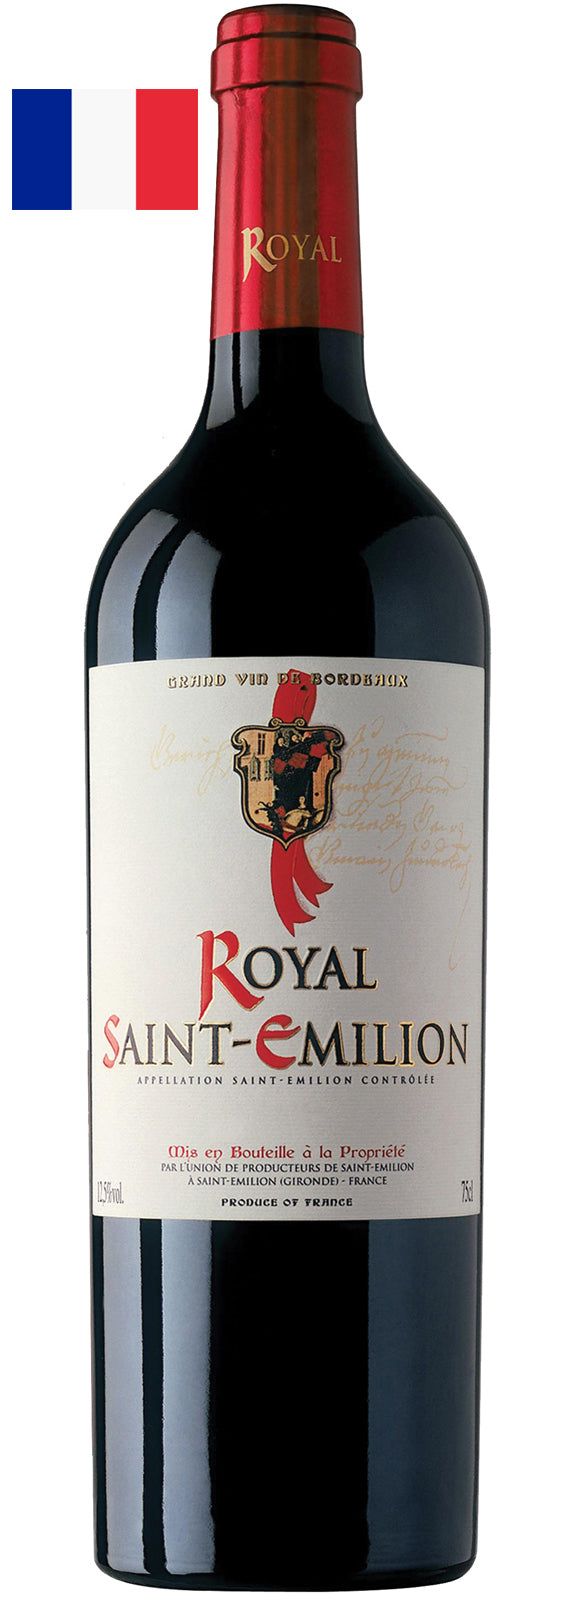 Royal Saint Emilion - Club del Gourmet